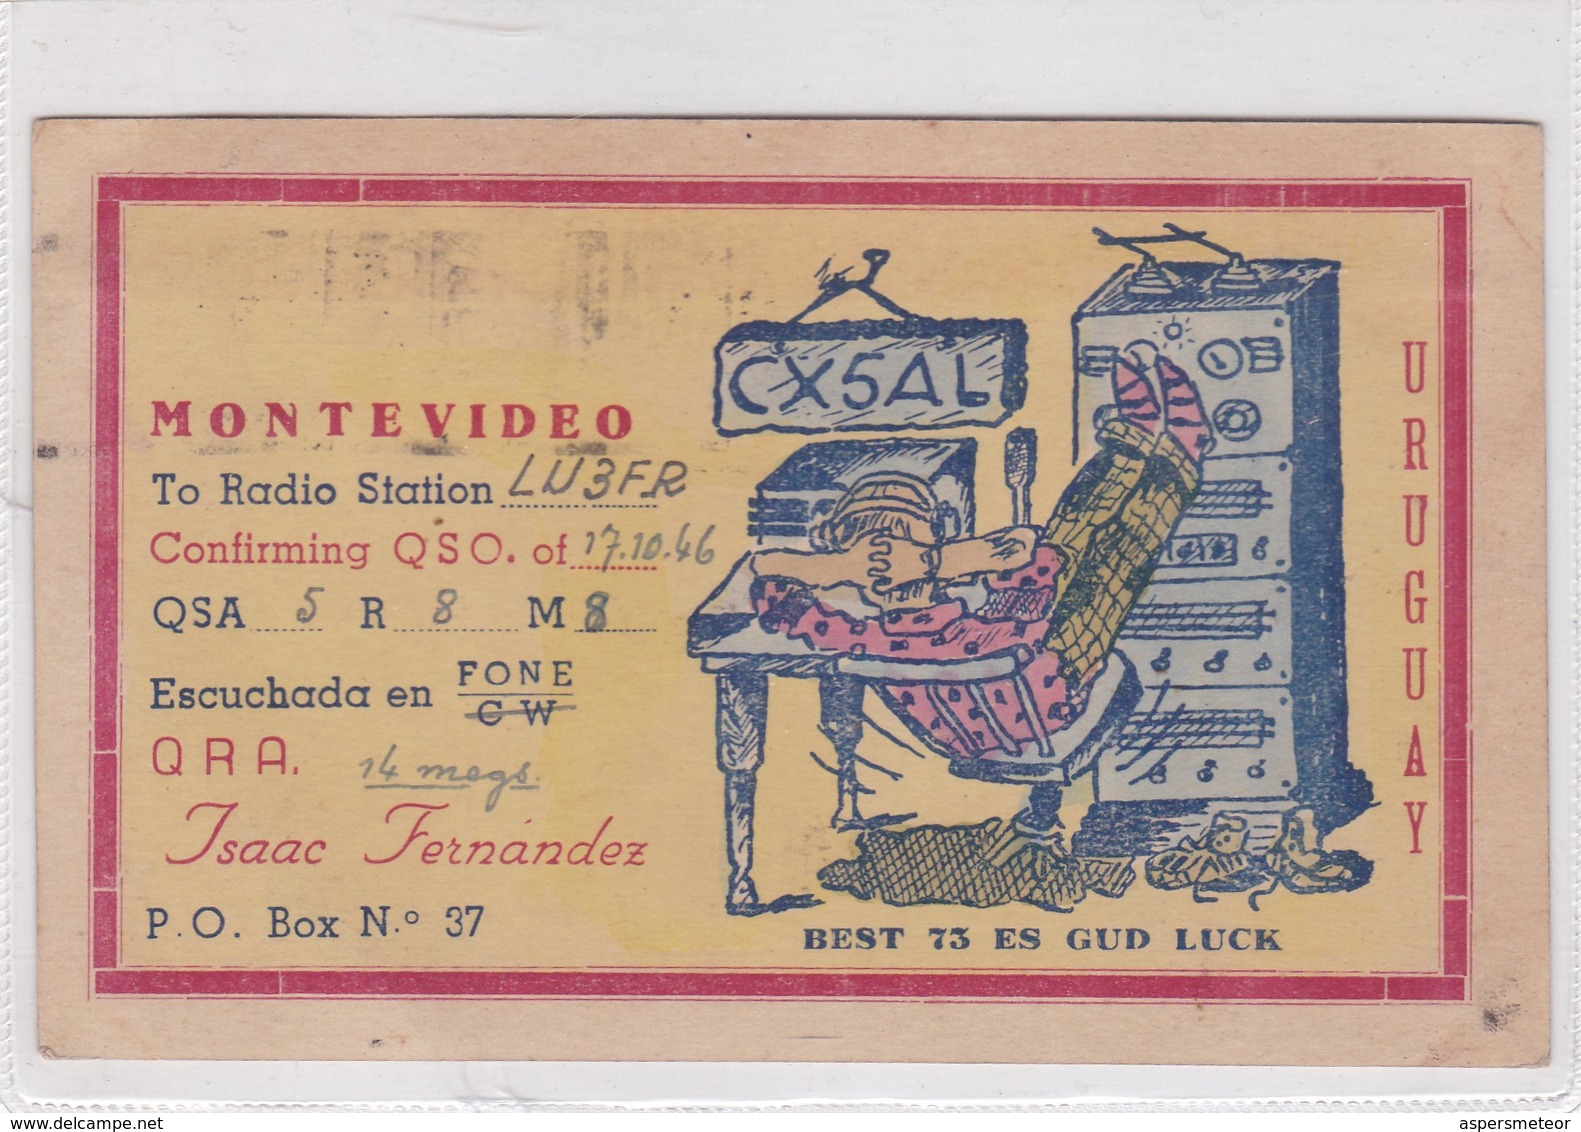 BEST 73 ES GUD LUCK. MONTEVIDEO, URUGUAY, CX5AQL CIRCULEE SANTA FE, ARGENTINA YEAR 1946. BANDELETA PARLANTE- BLEUP - Radio-amateur